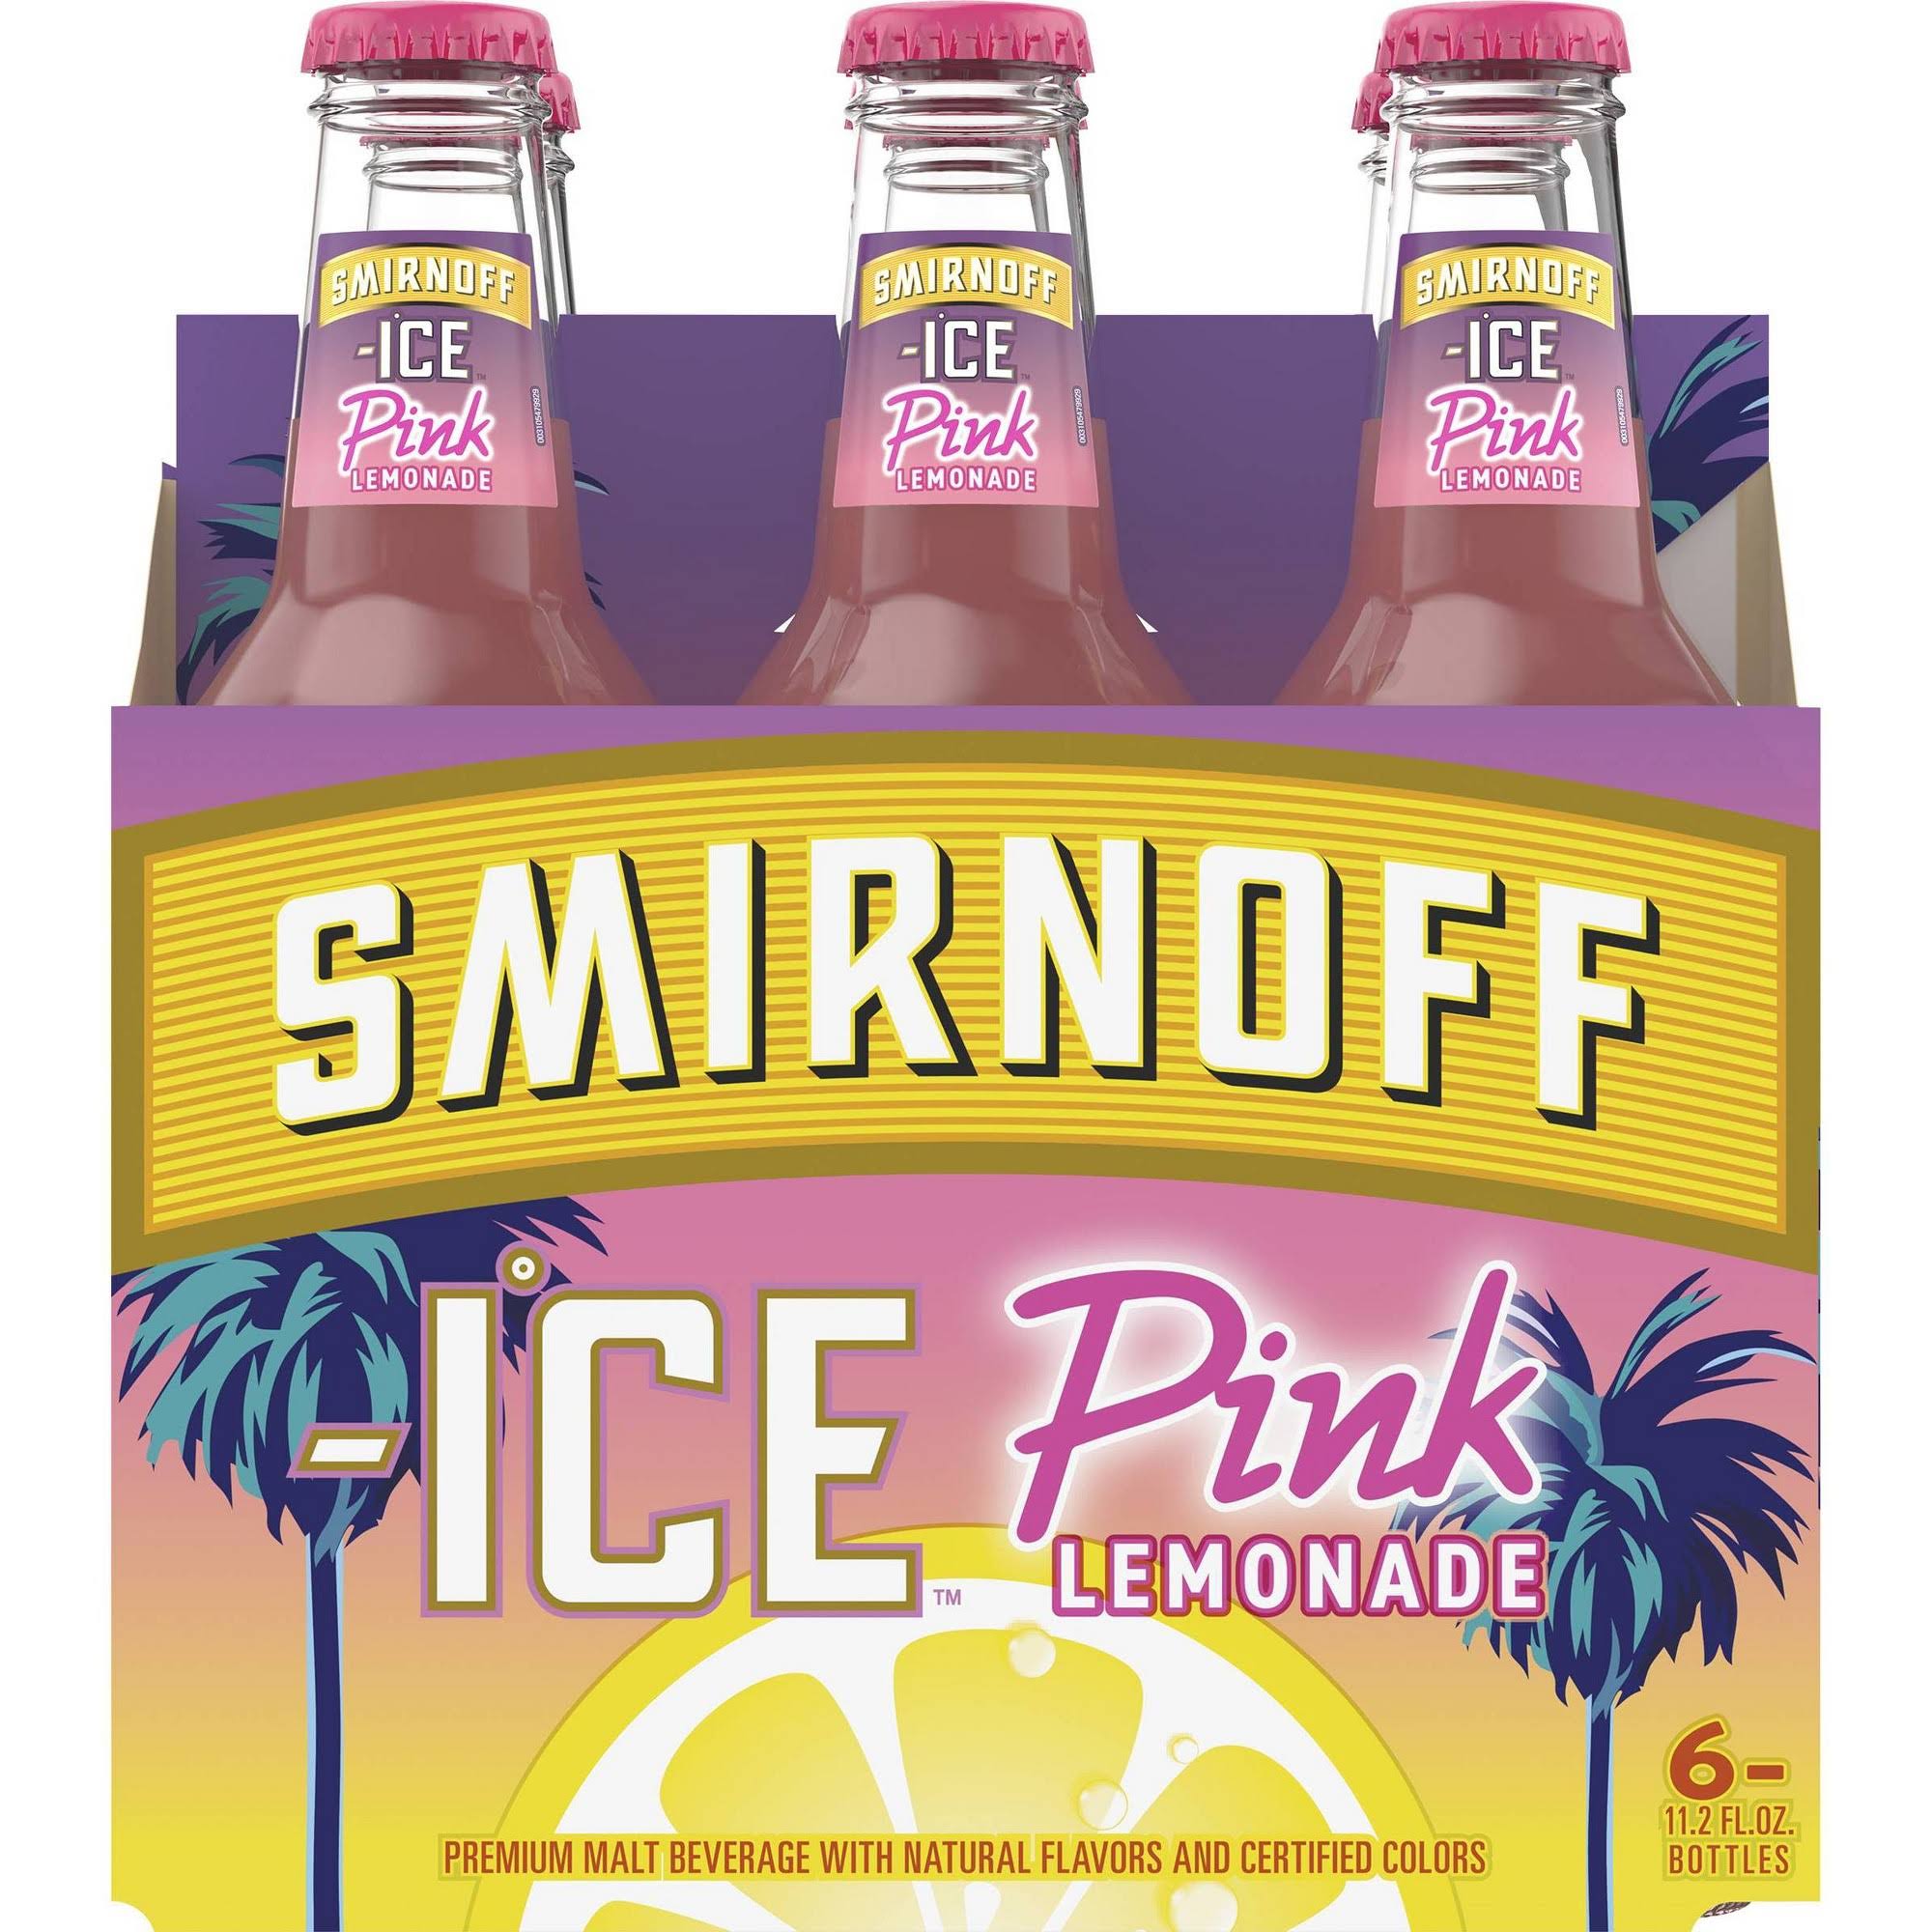 Smirnoff Ice Malt Beverage, Pink Lemonade, Premium - 6 pack, 11.2 fl oz bottles